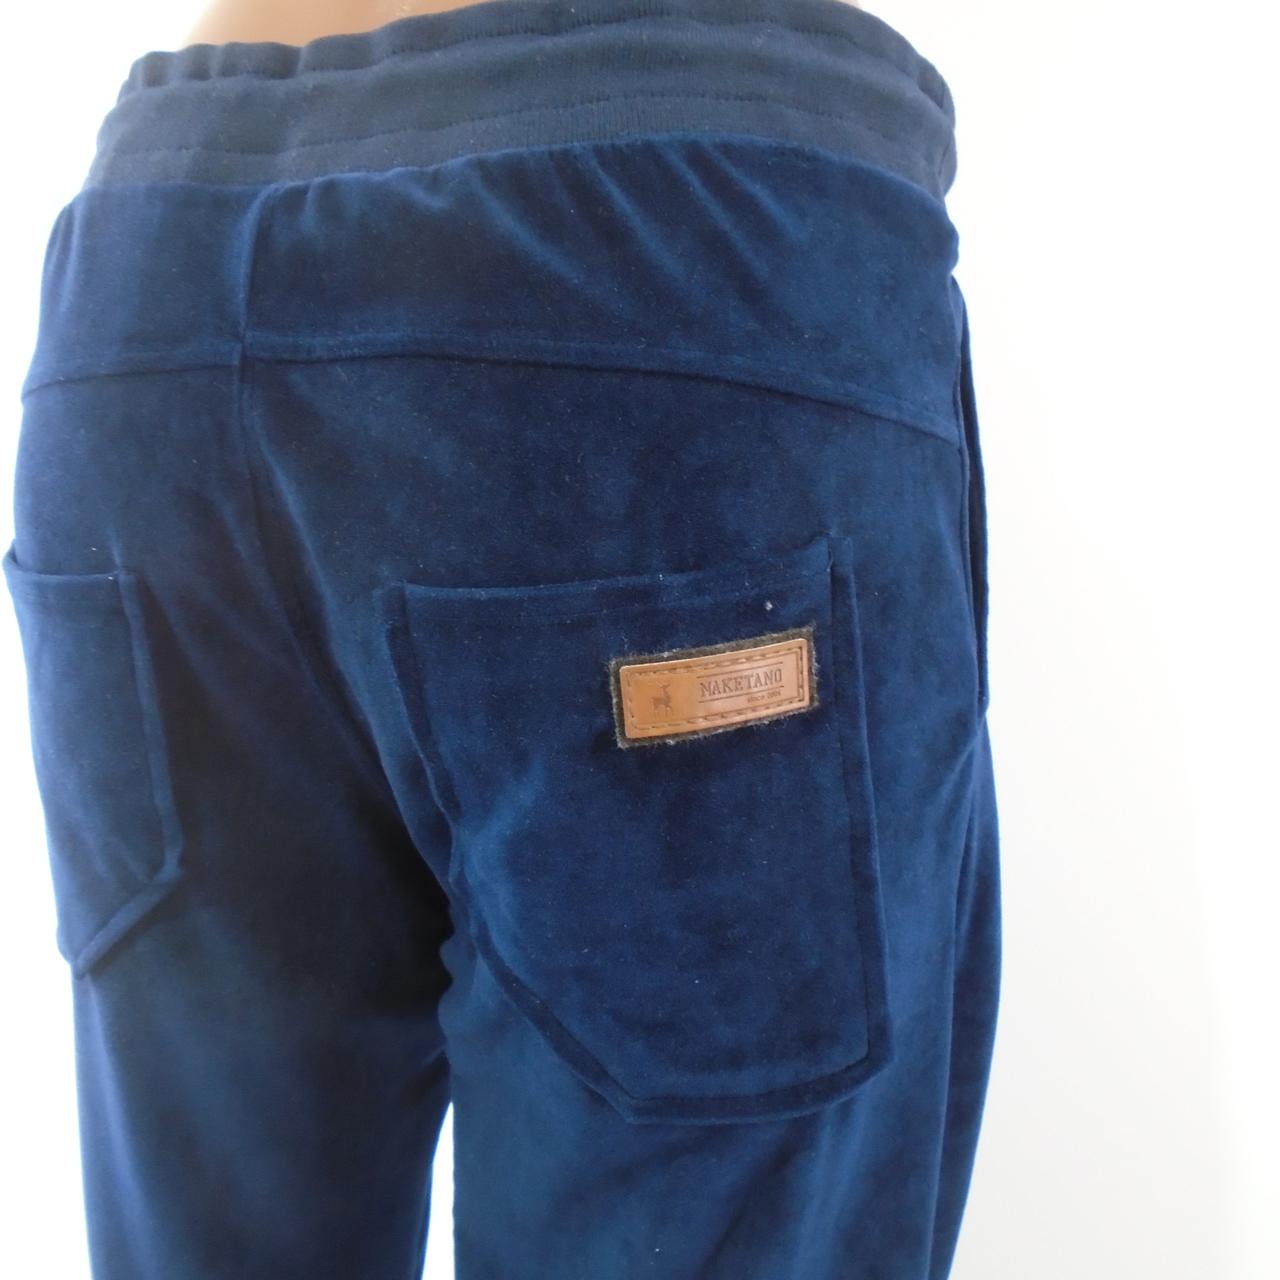 Women's Pants Naketano. Dark blue. S. Used. Satisfactory